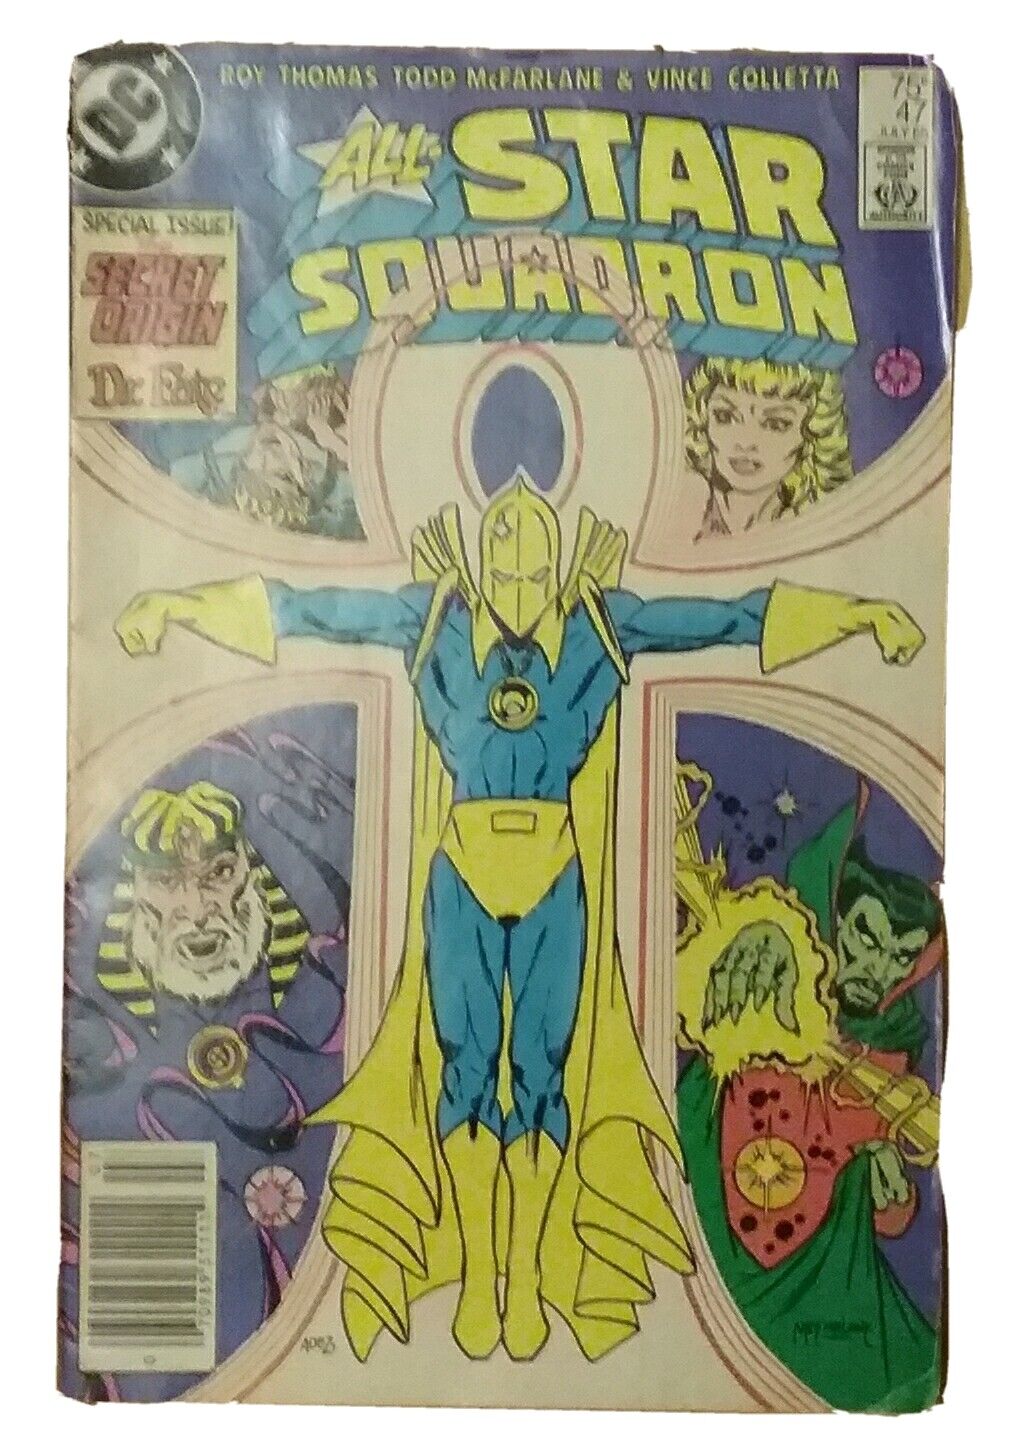 ALL STAR SQUADRON #47 DC 1985 - Origin Dr. Fate - early Todd McFarlane art